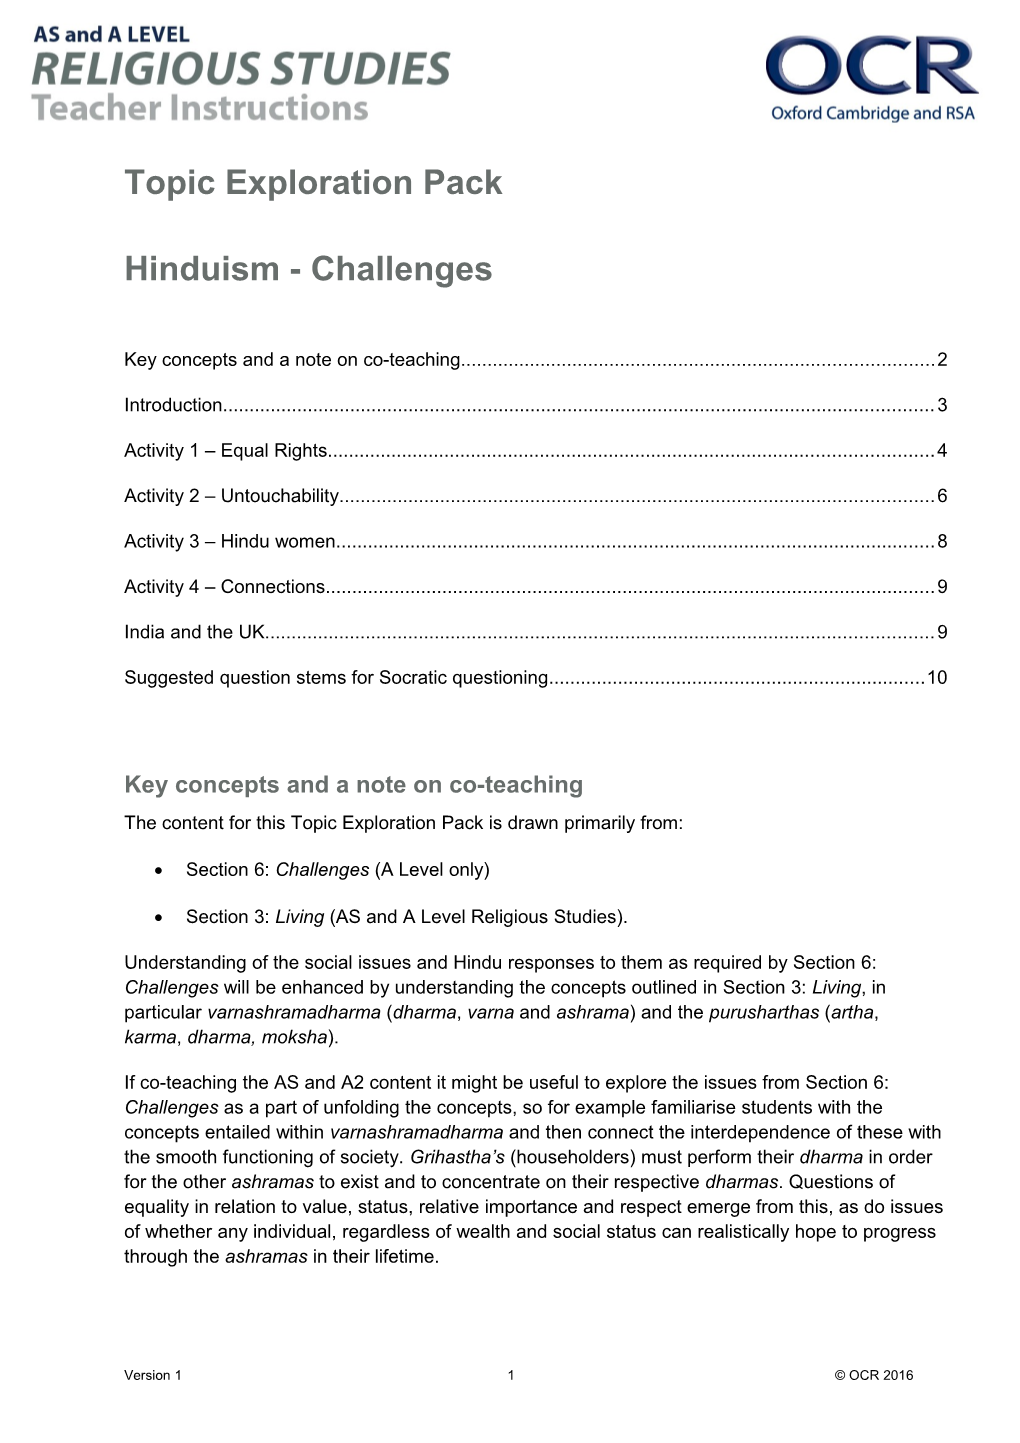 OCR GCSE Religious Studies Topic Exploration Pack: Hinduism - Challenges